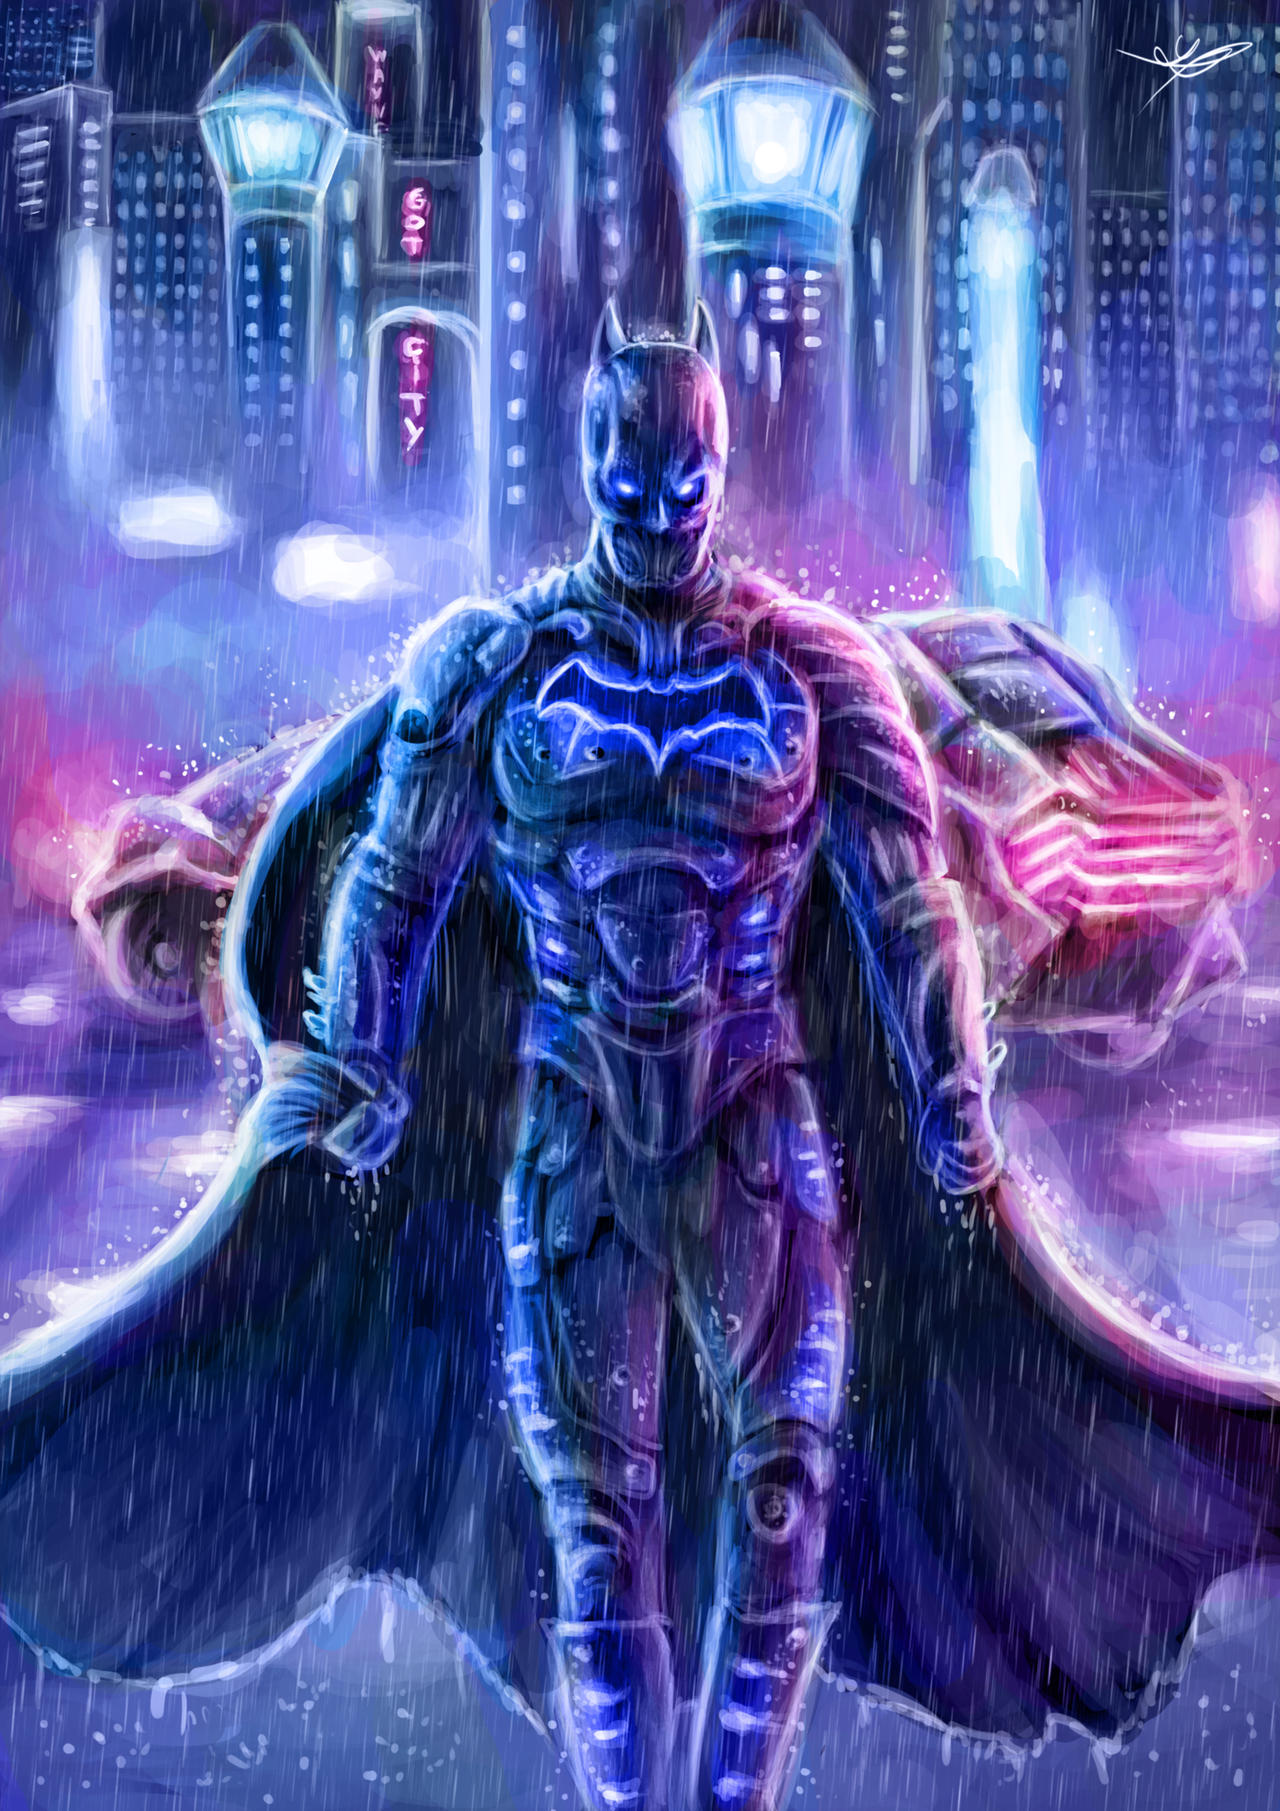 Cyberpunk Batman by Piloufac on DeviantArt